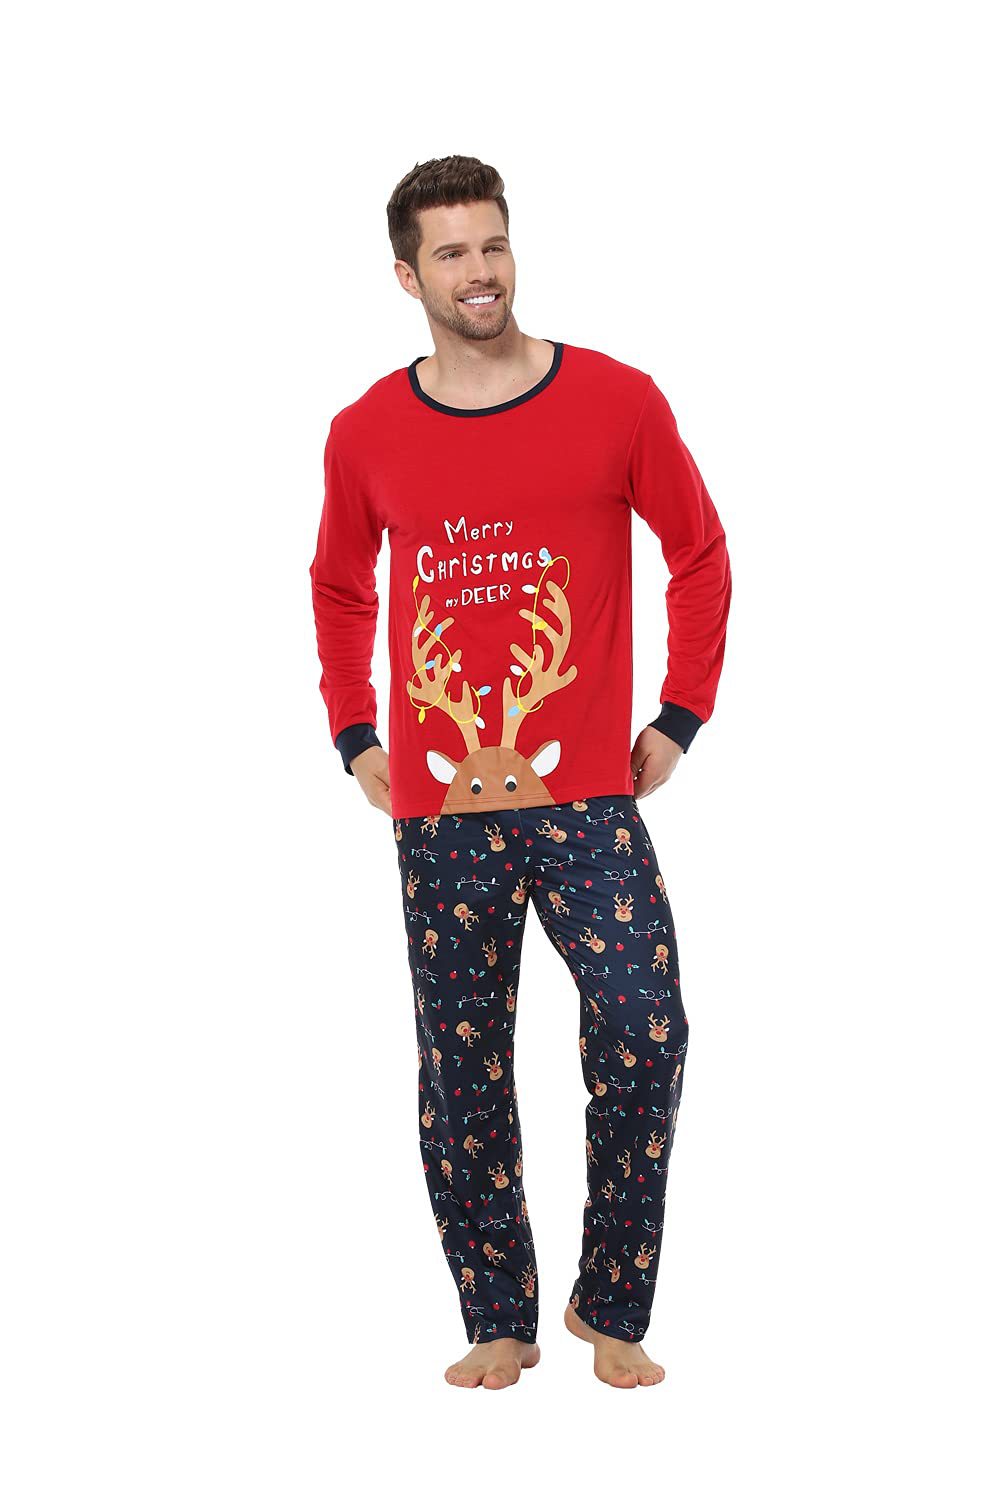 Family Christmas Deer Parent-child Print Pajamas Loungewear